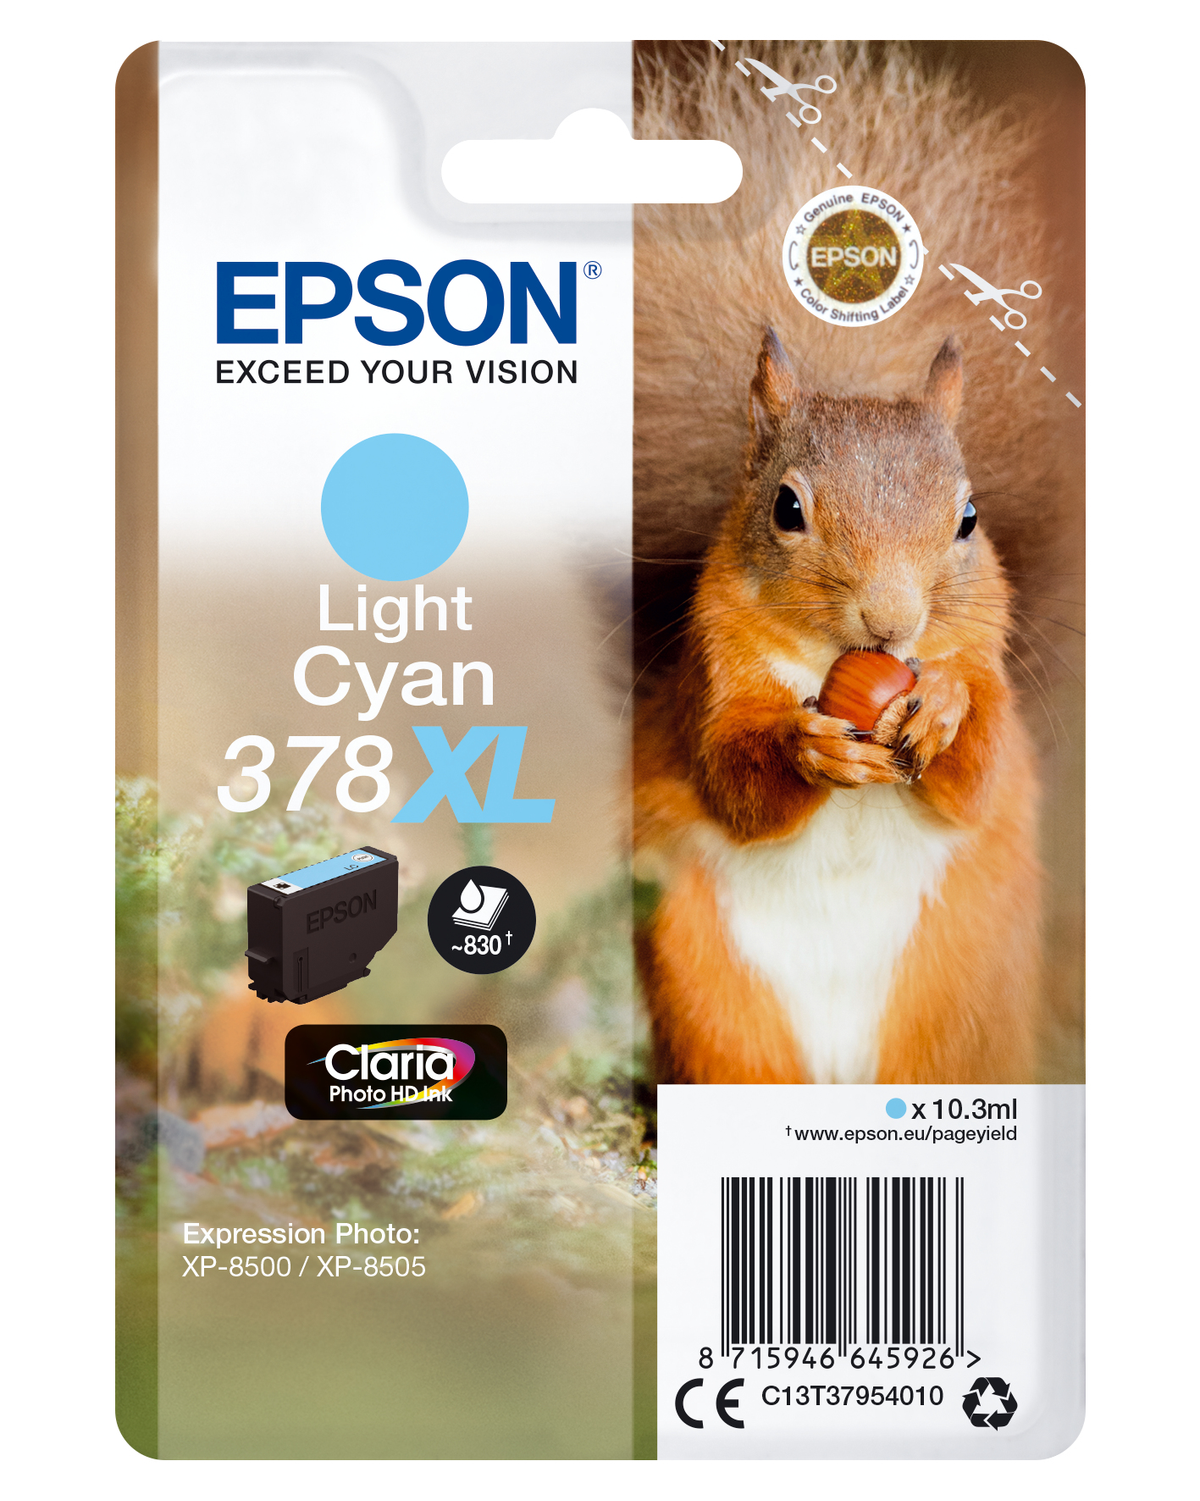 EPSON 378XL Tinte photo (C13T37954010) cyan